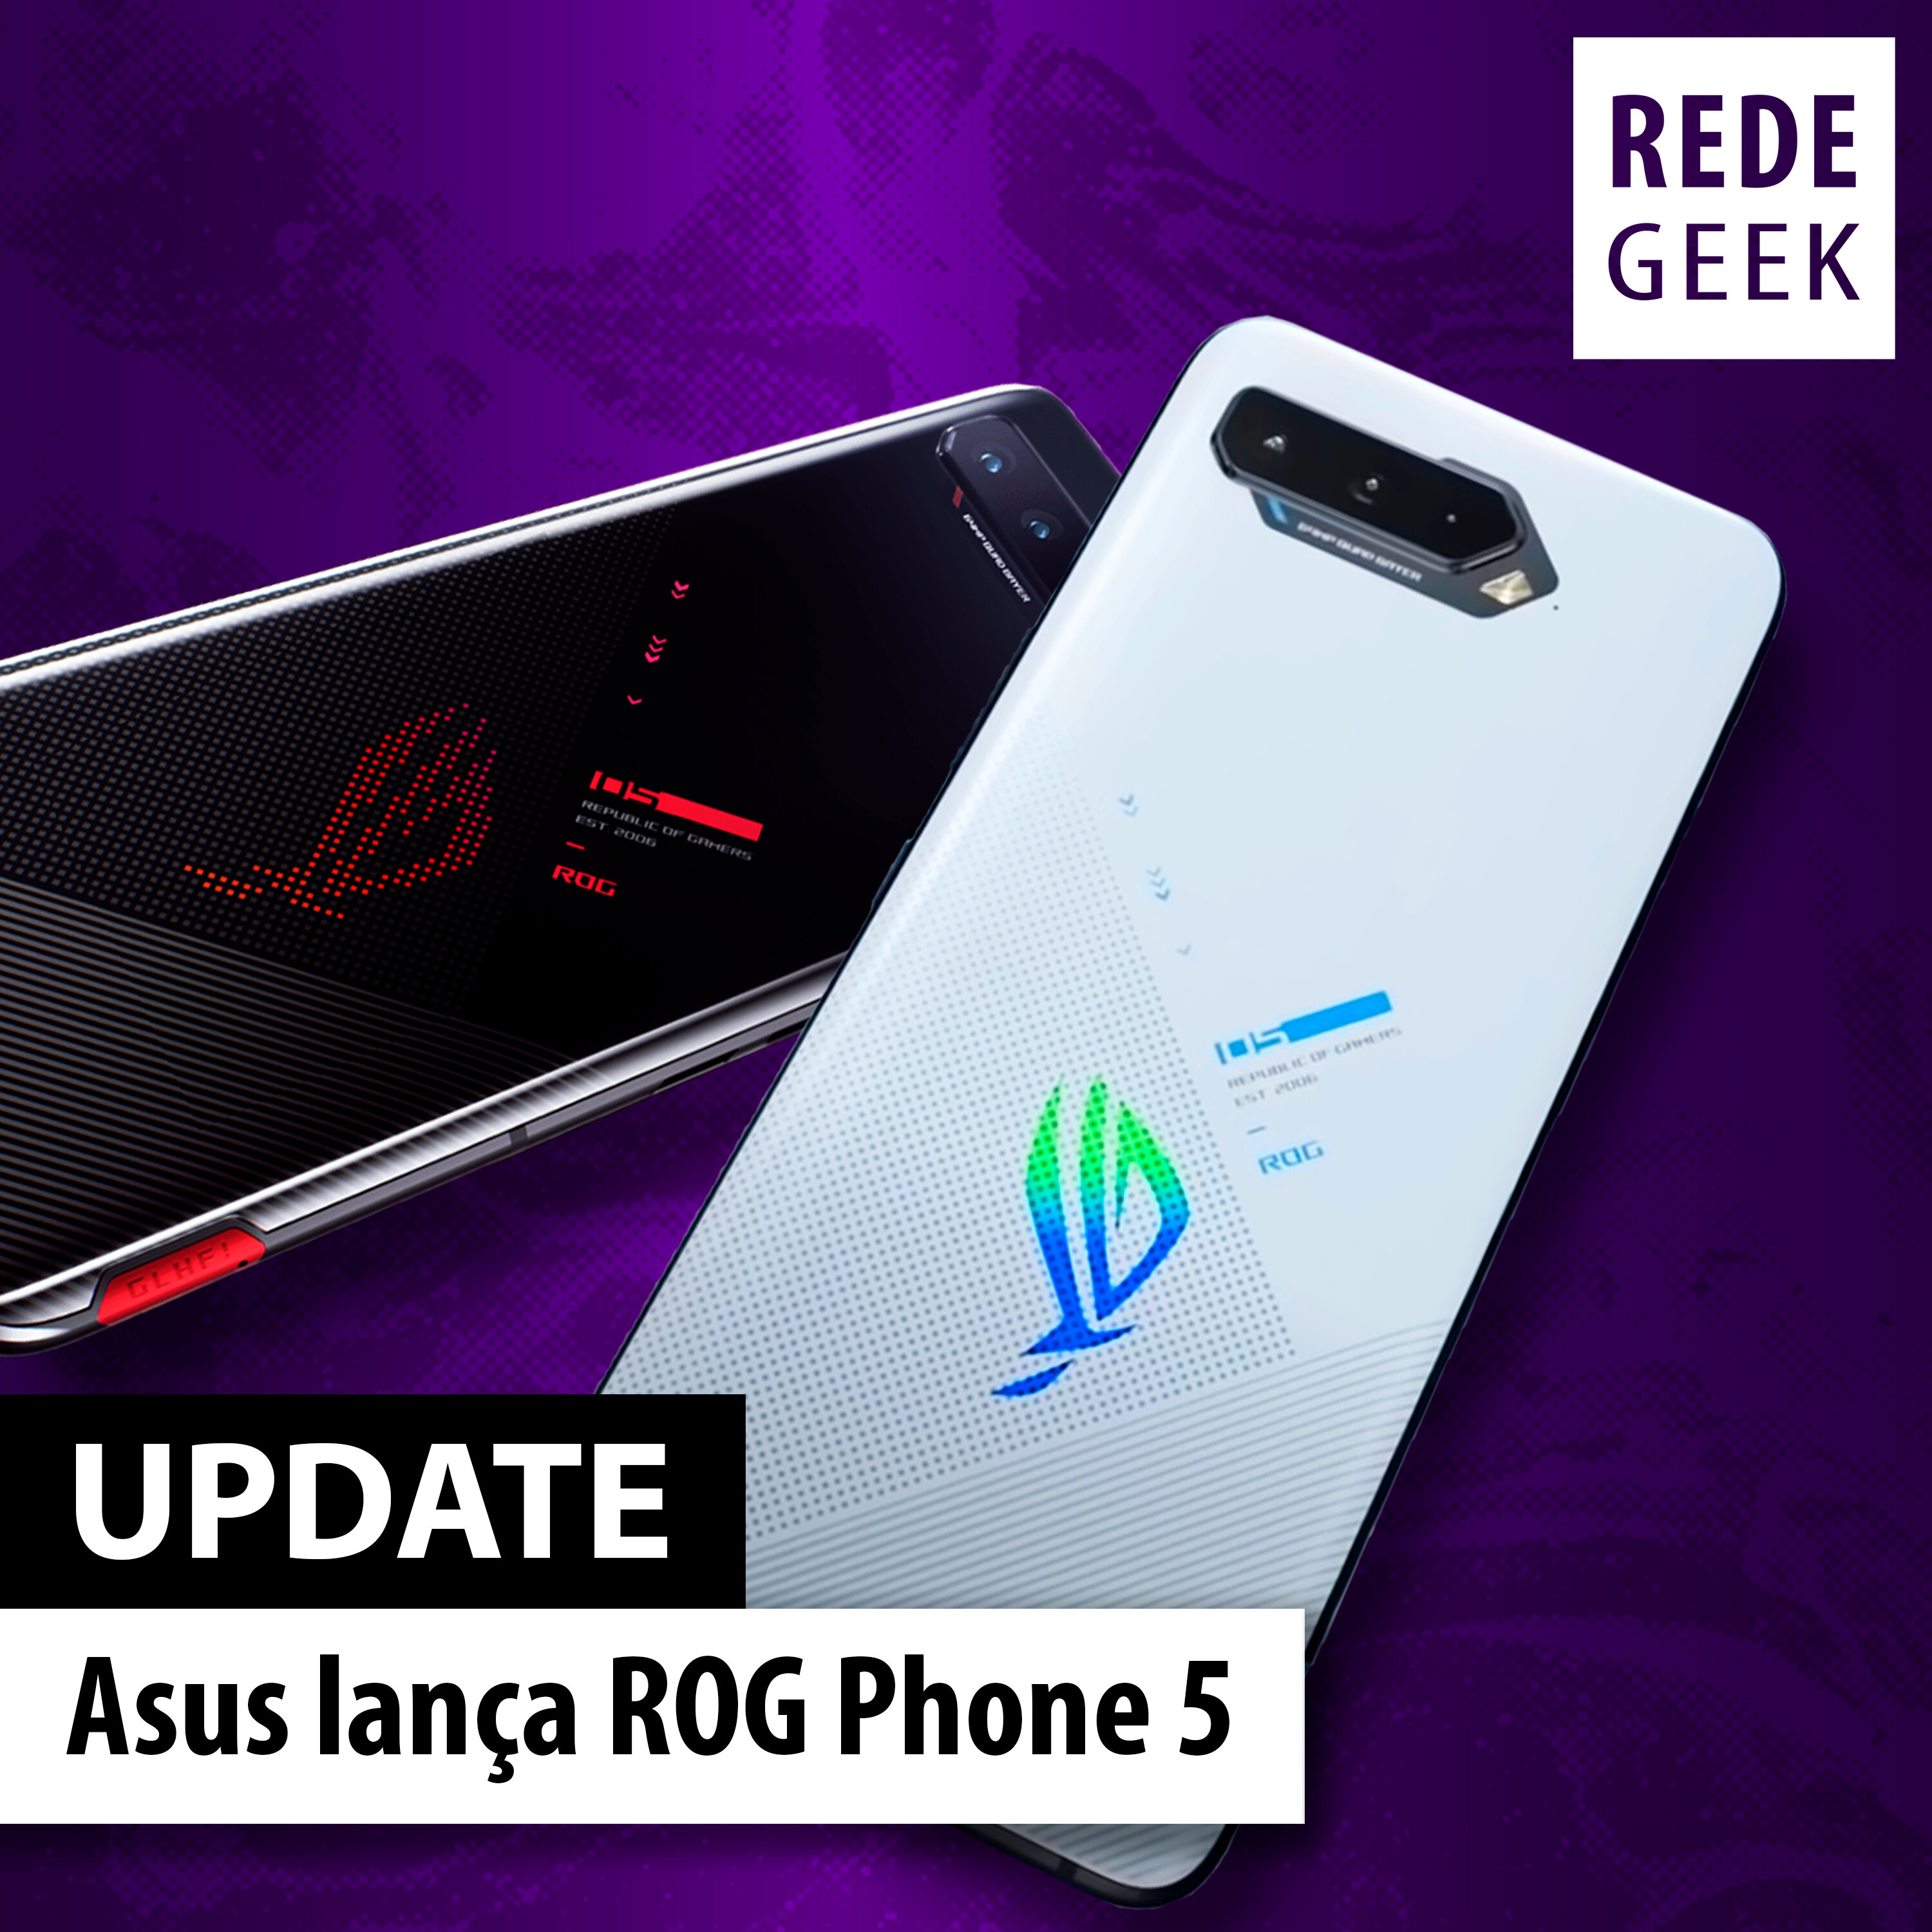 UPDATE - Asus lança ROG Phone 5